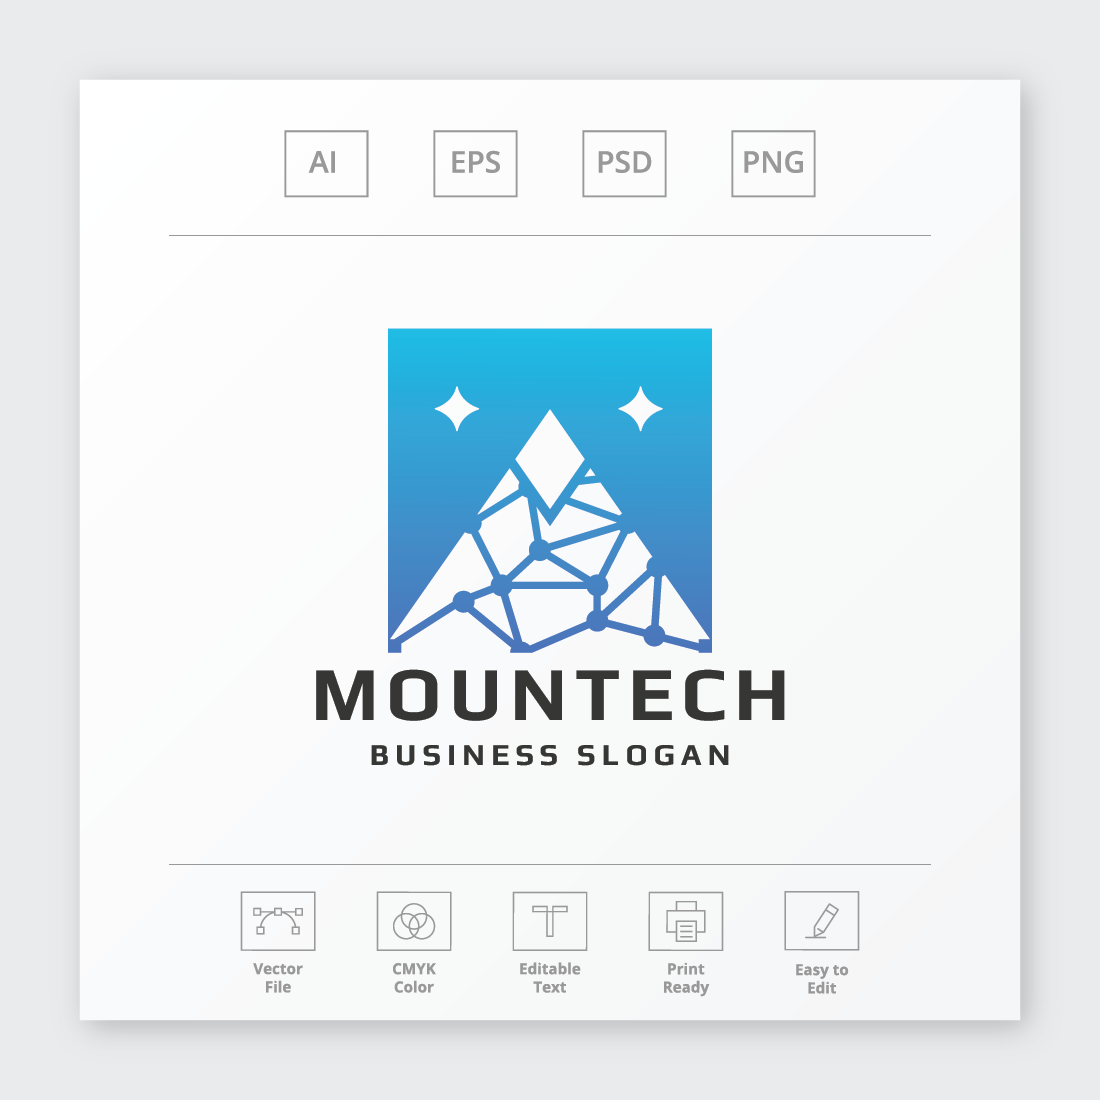 Mountain Tech Letter M Logo preview image.